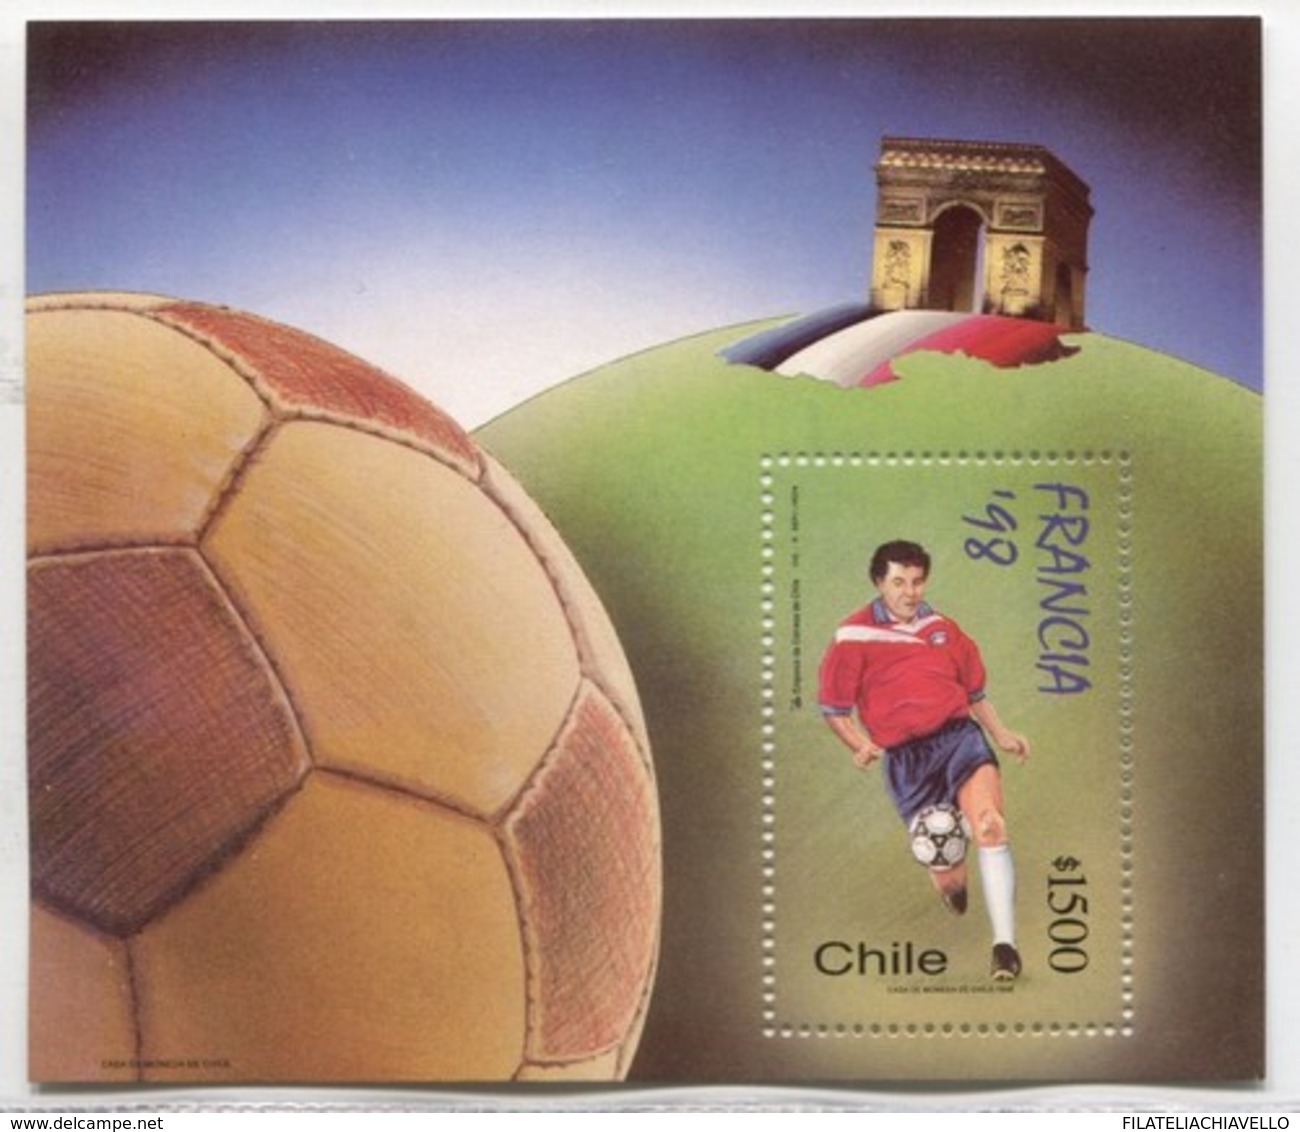 SOCCER FOOTBALL SPORT CHILE Good MINT MNH STAMP SHEET # 45397  051219 - Chili